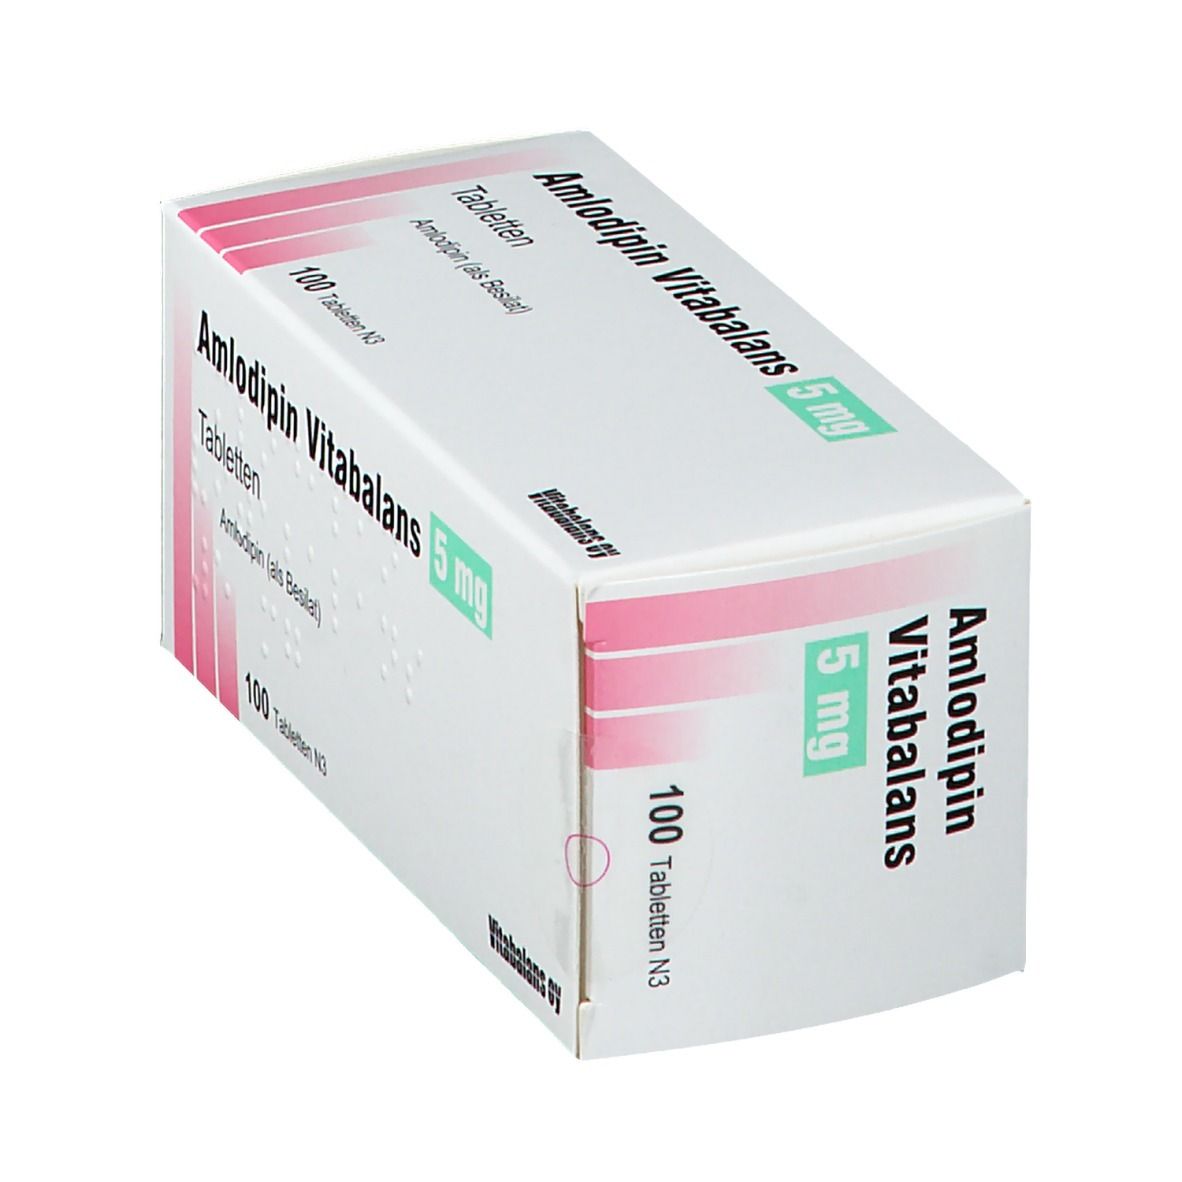 Amlodipin Vitabalans 5 mg